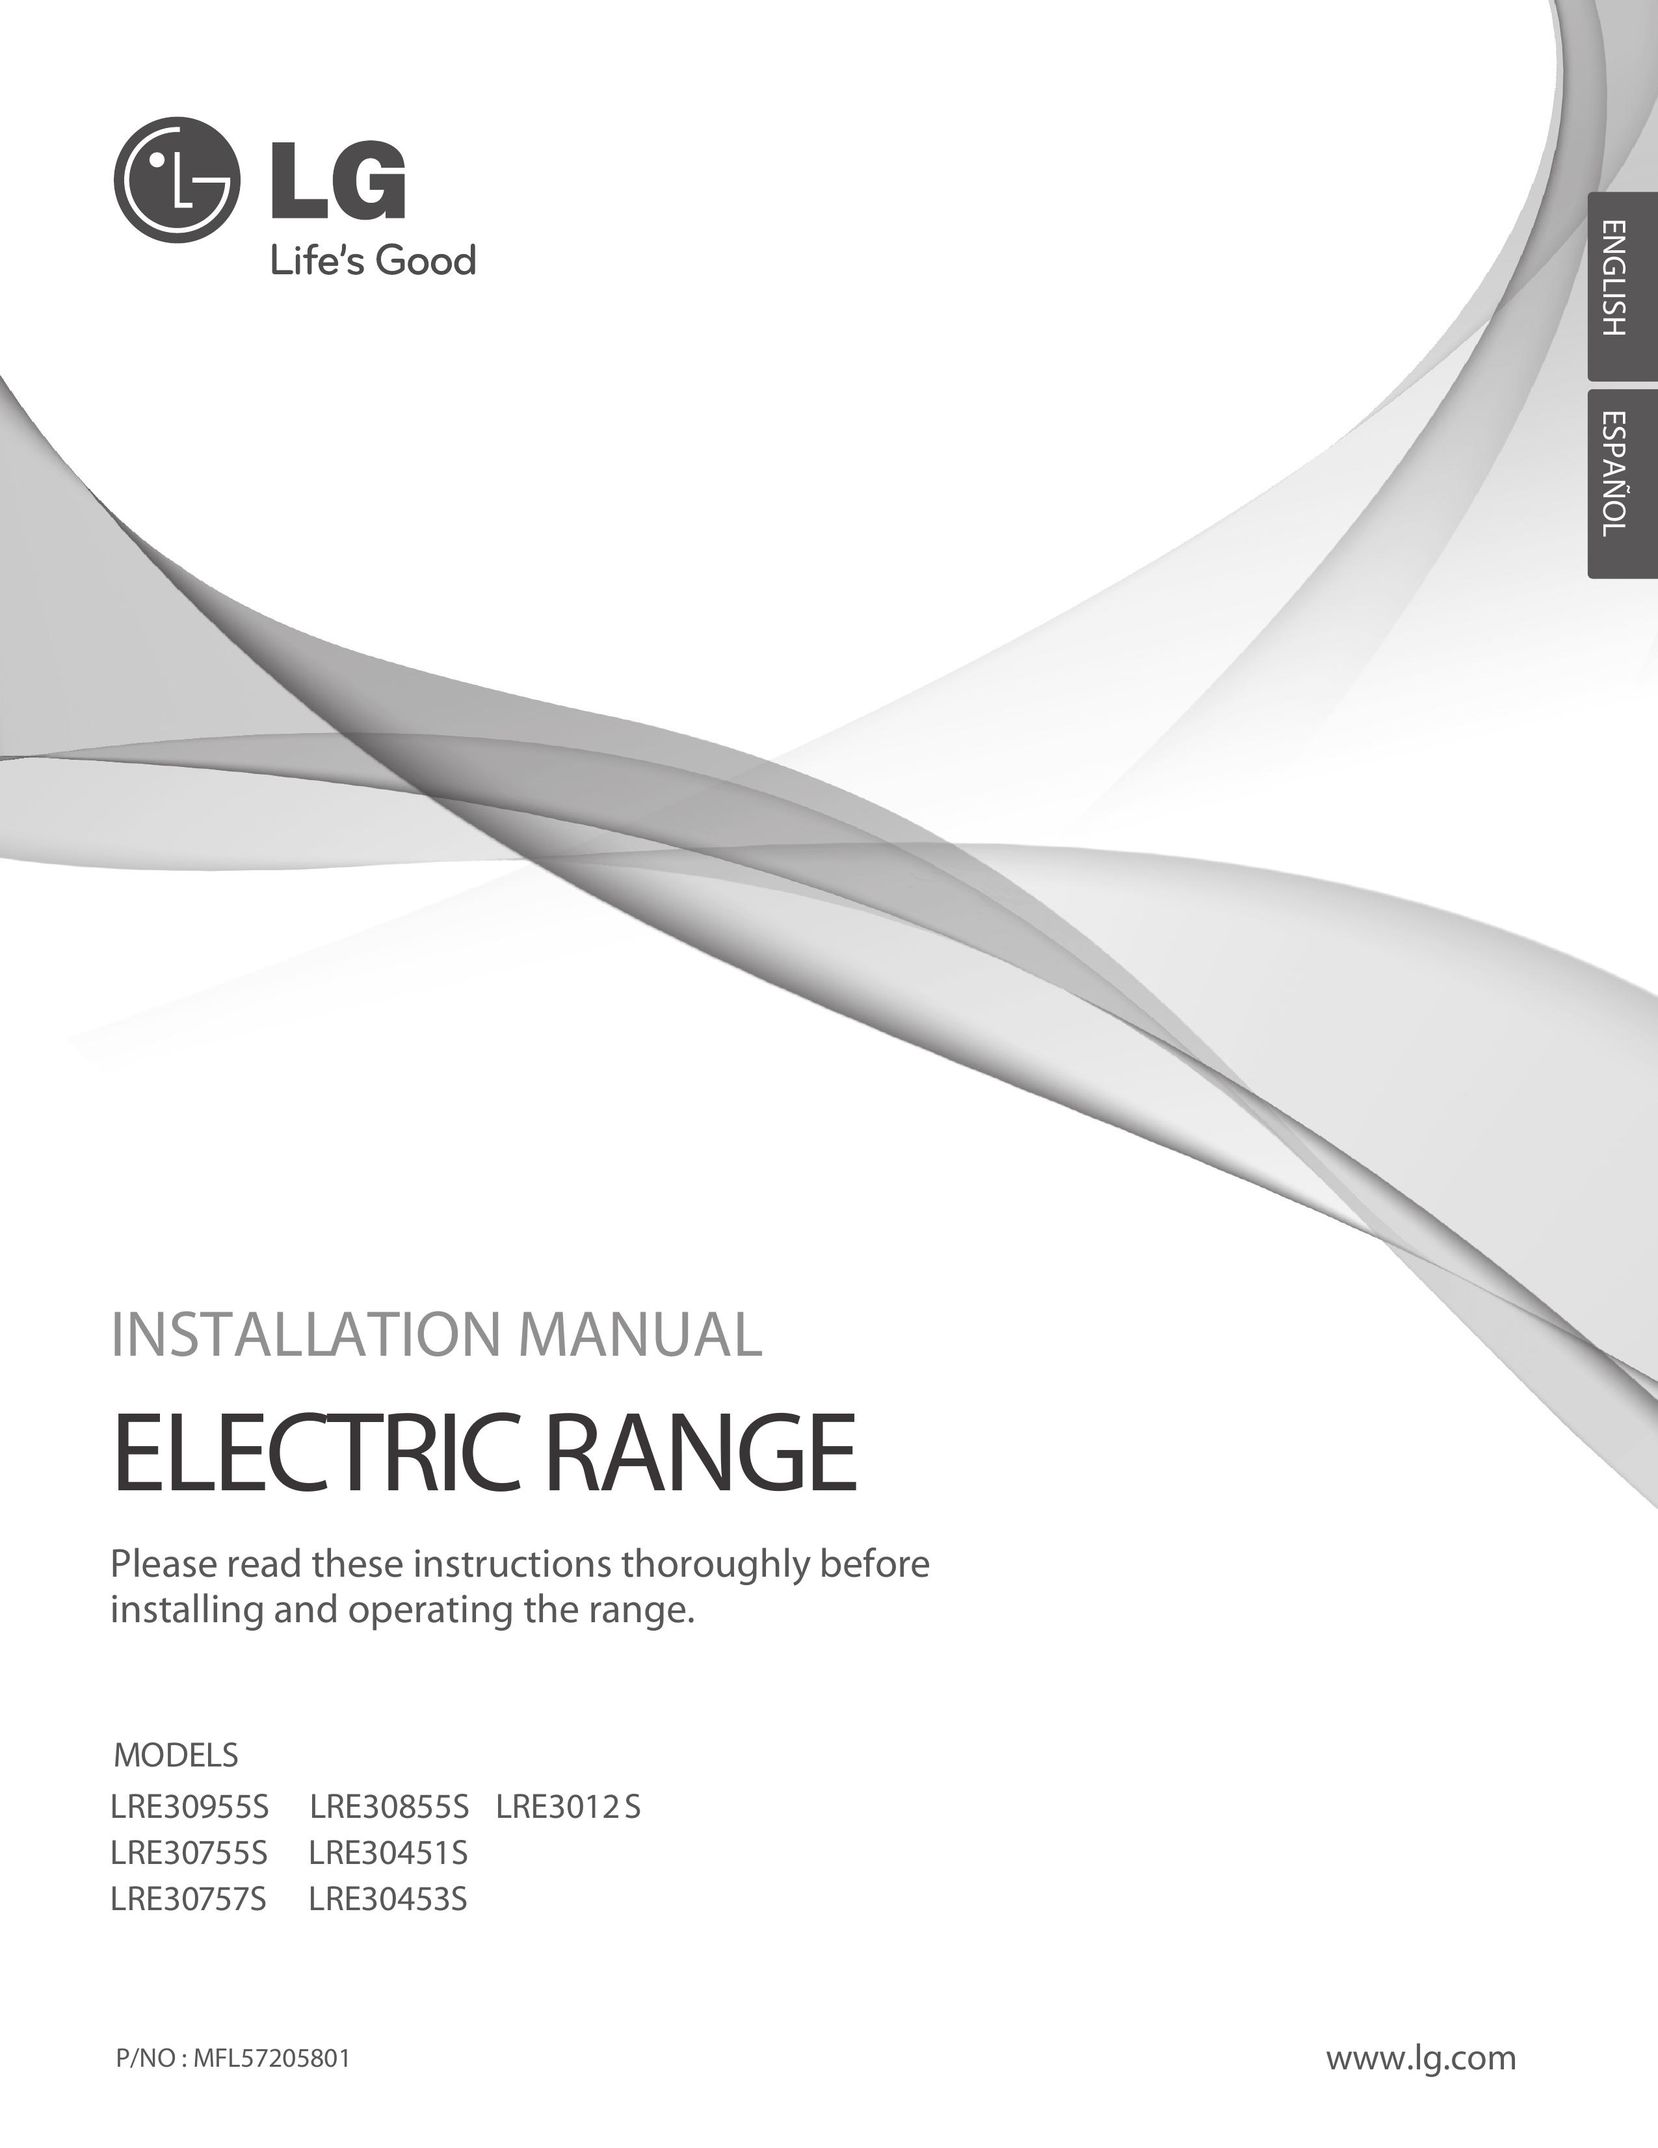 LG Electronics LRE30757S Range User Manual